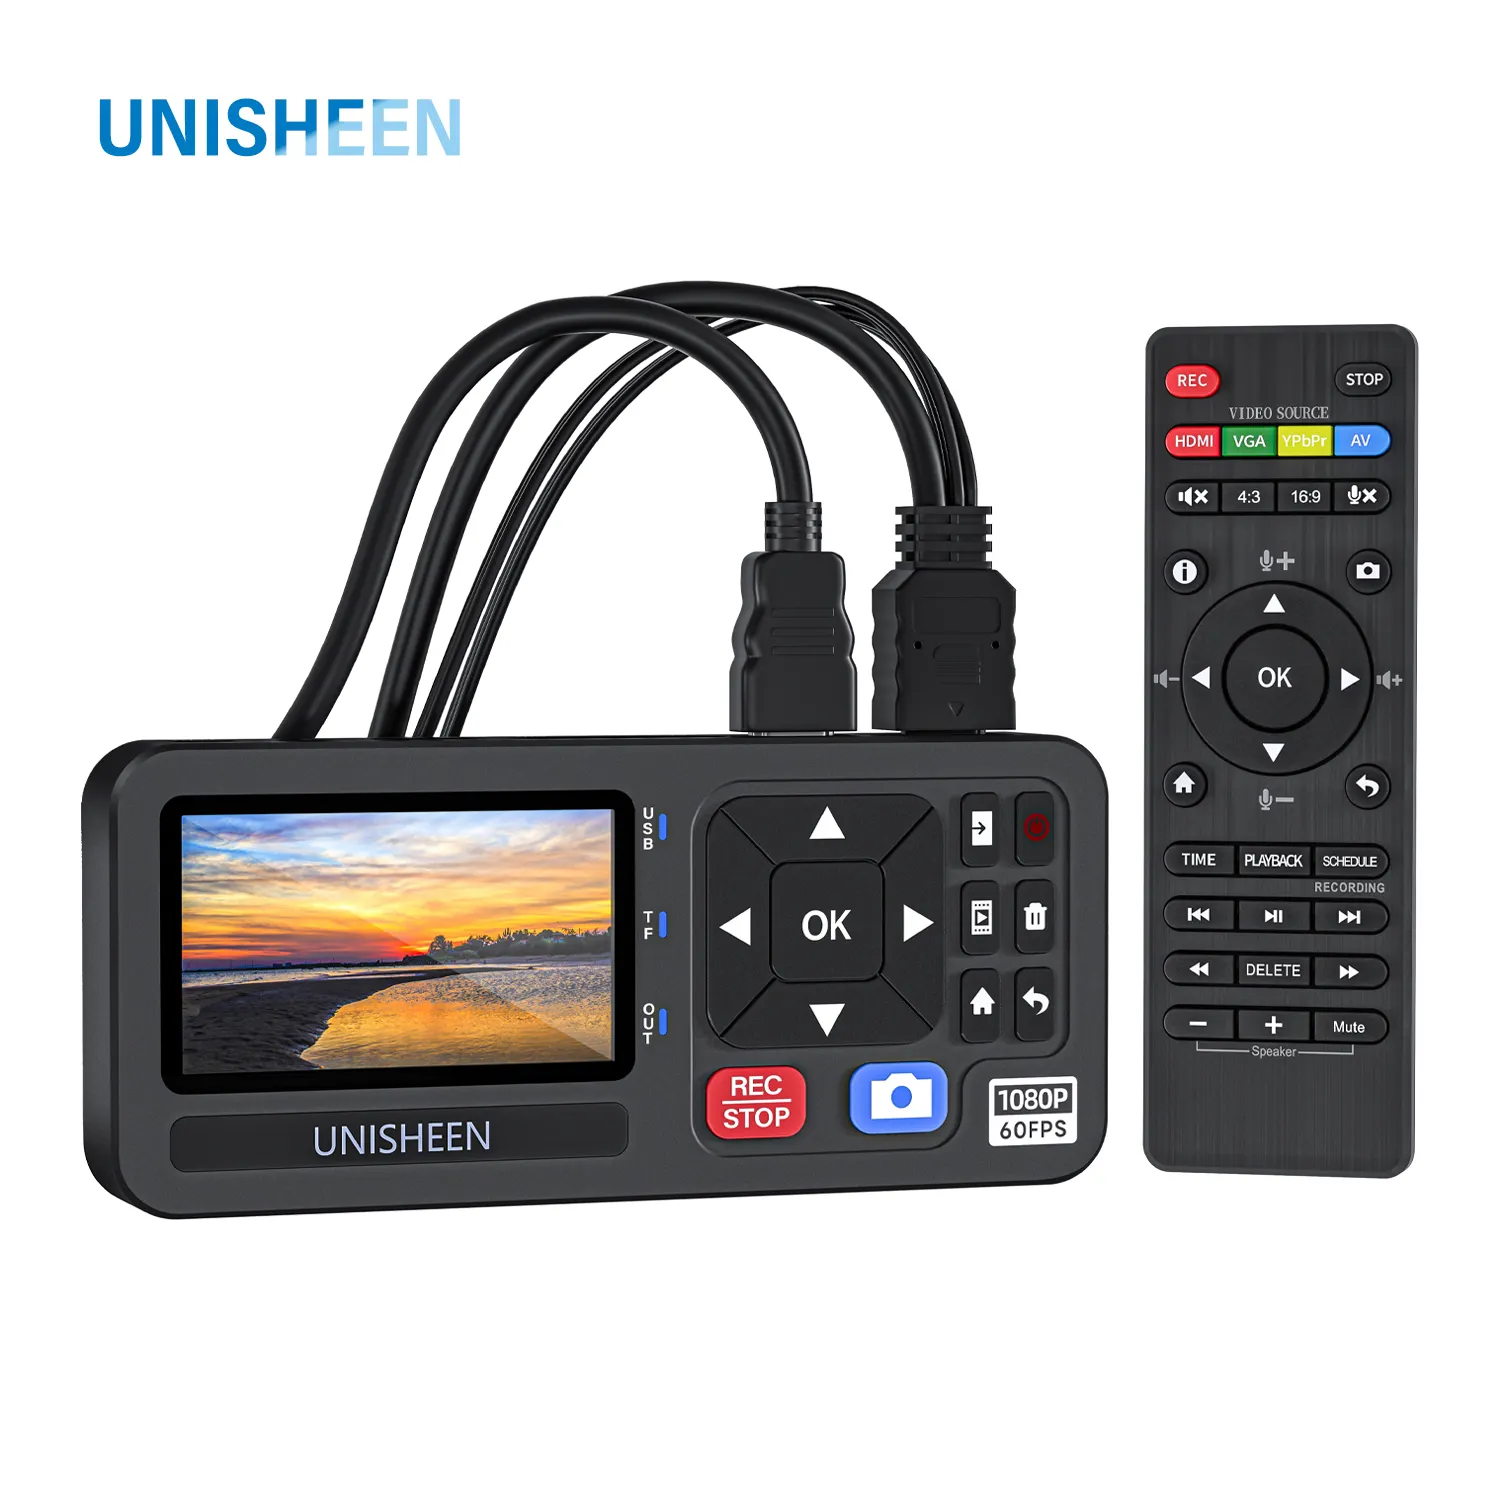 Unisheen Hot HD DVD Video Converter Captura y Stream Video desde RCA VHS a Digital Converter Box